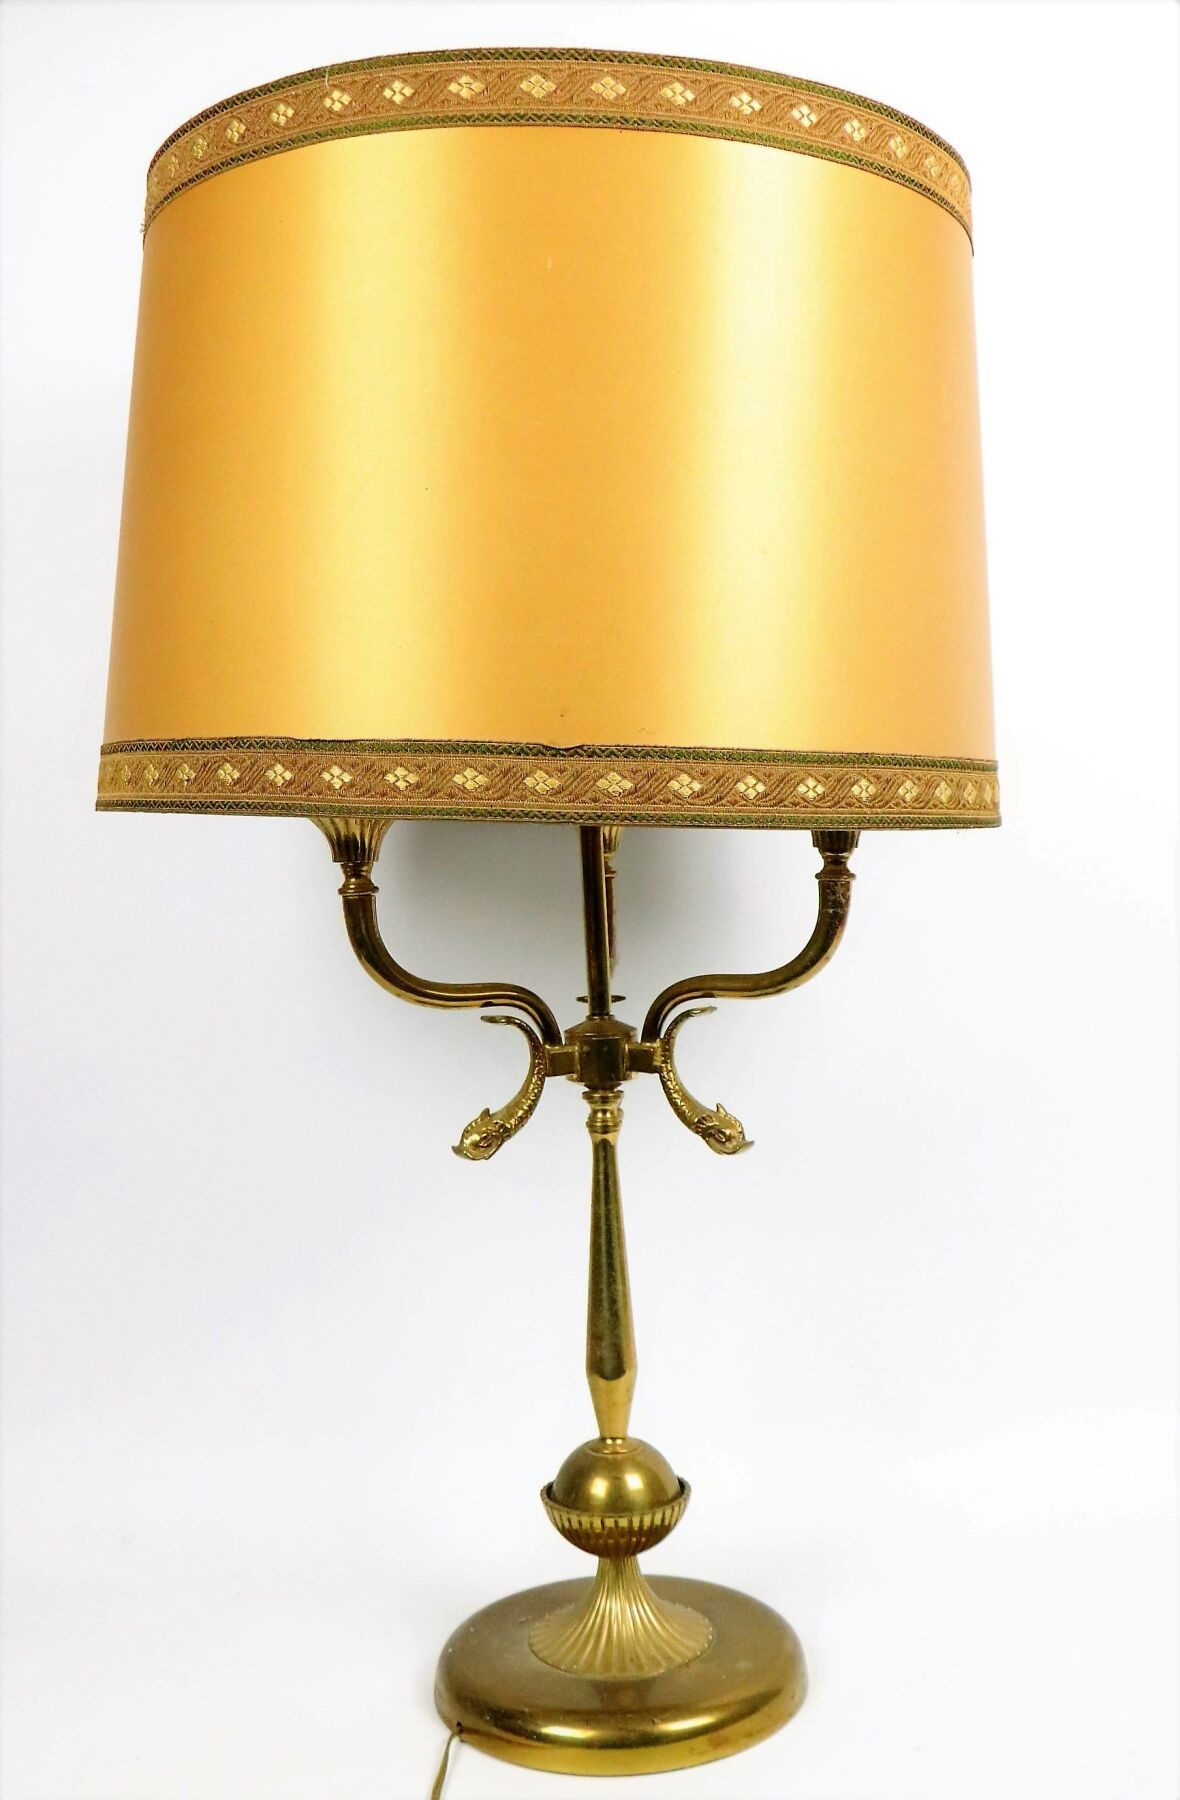 Null Brass three-light desk lamp with tritons design.
20th century.
H_77.2 cm.